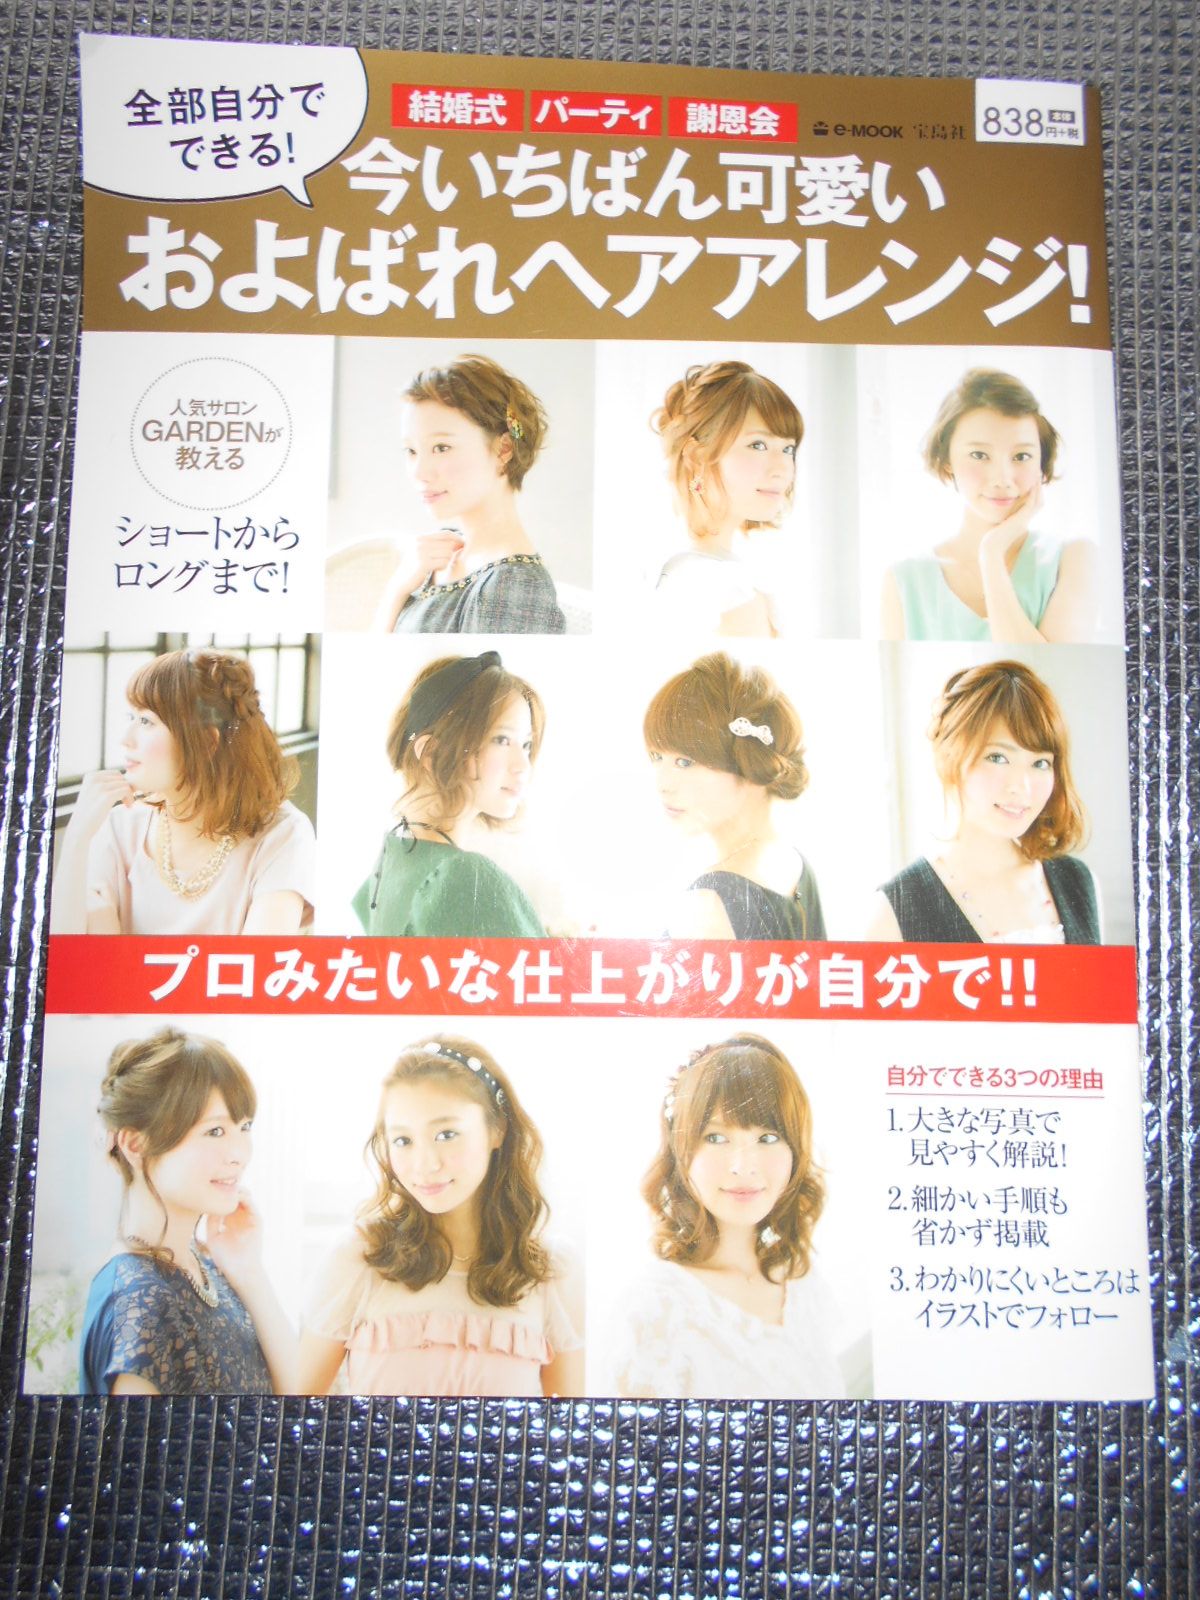 Hairdo Hair Styles Japan Book Used Kawaii Girl Woman Ebay